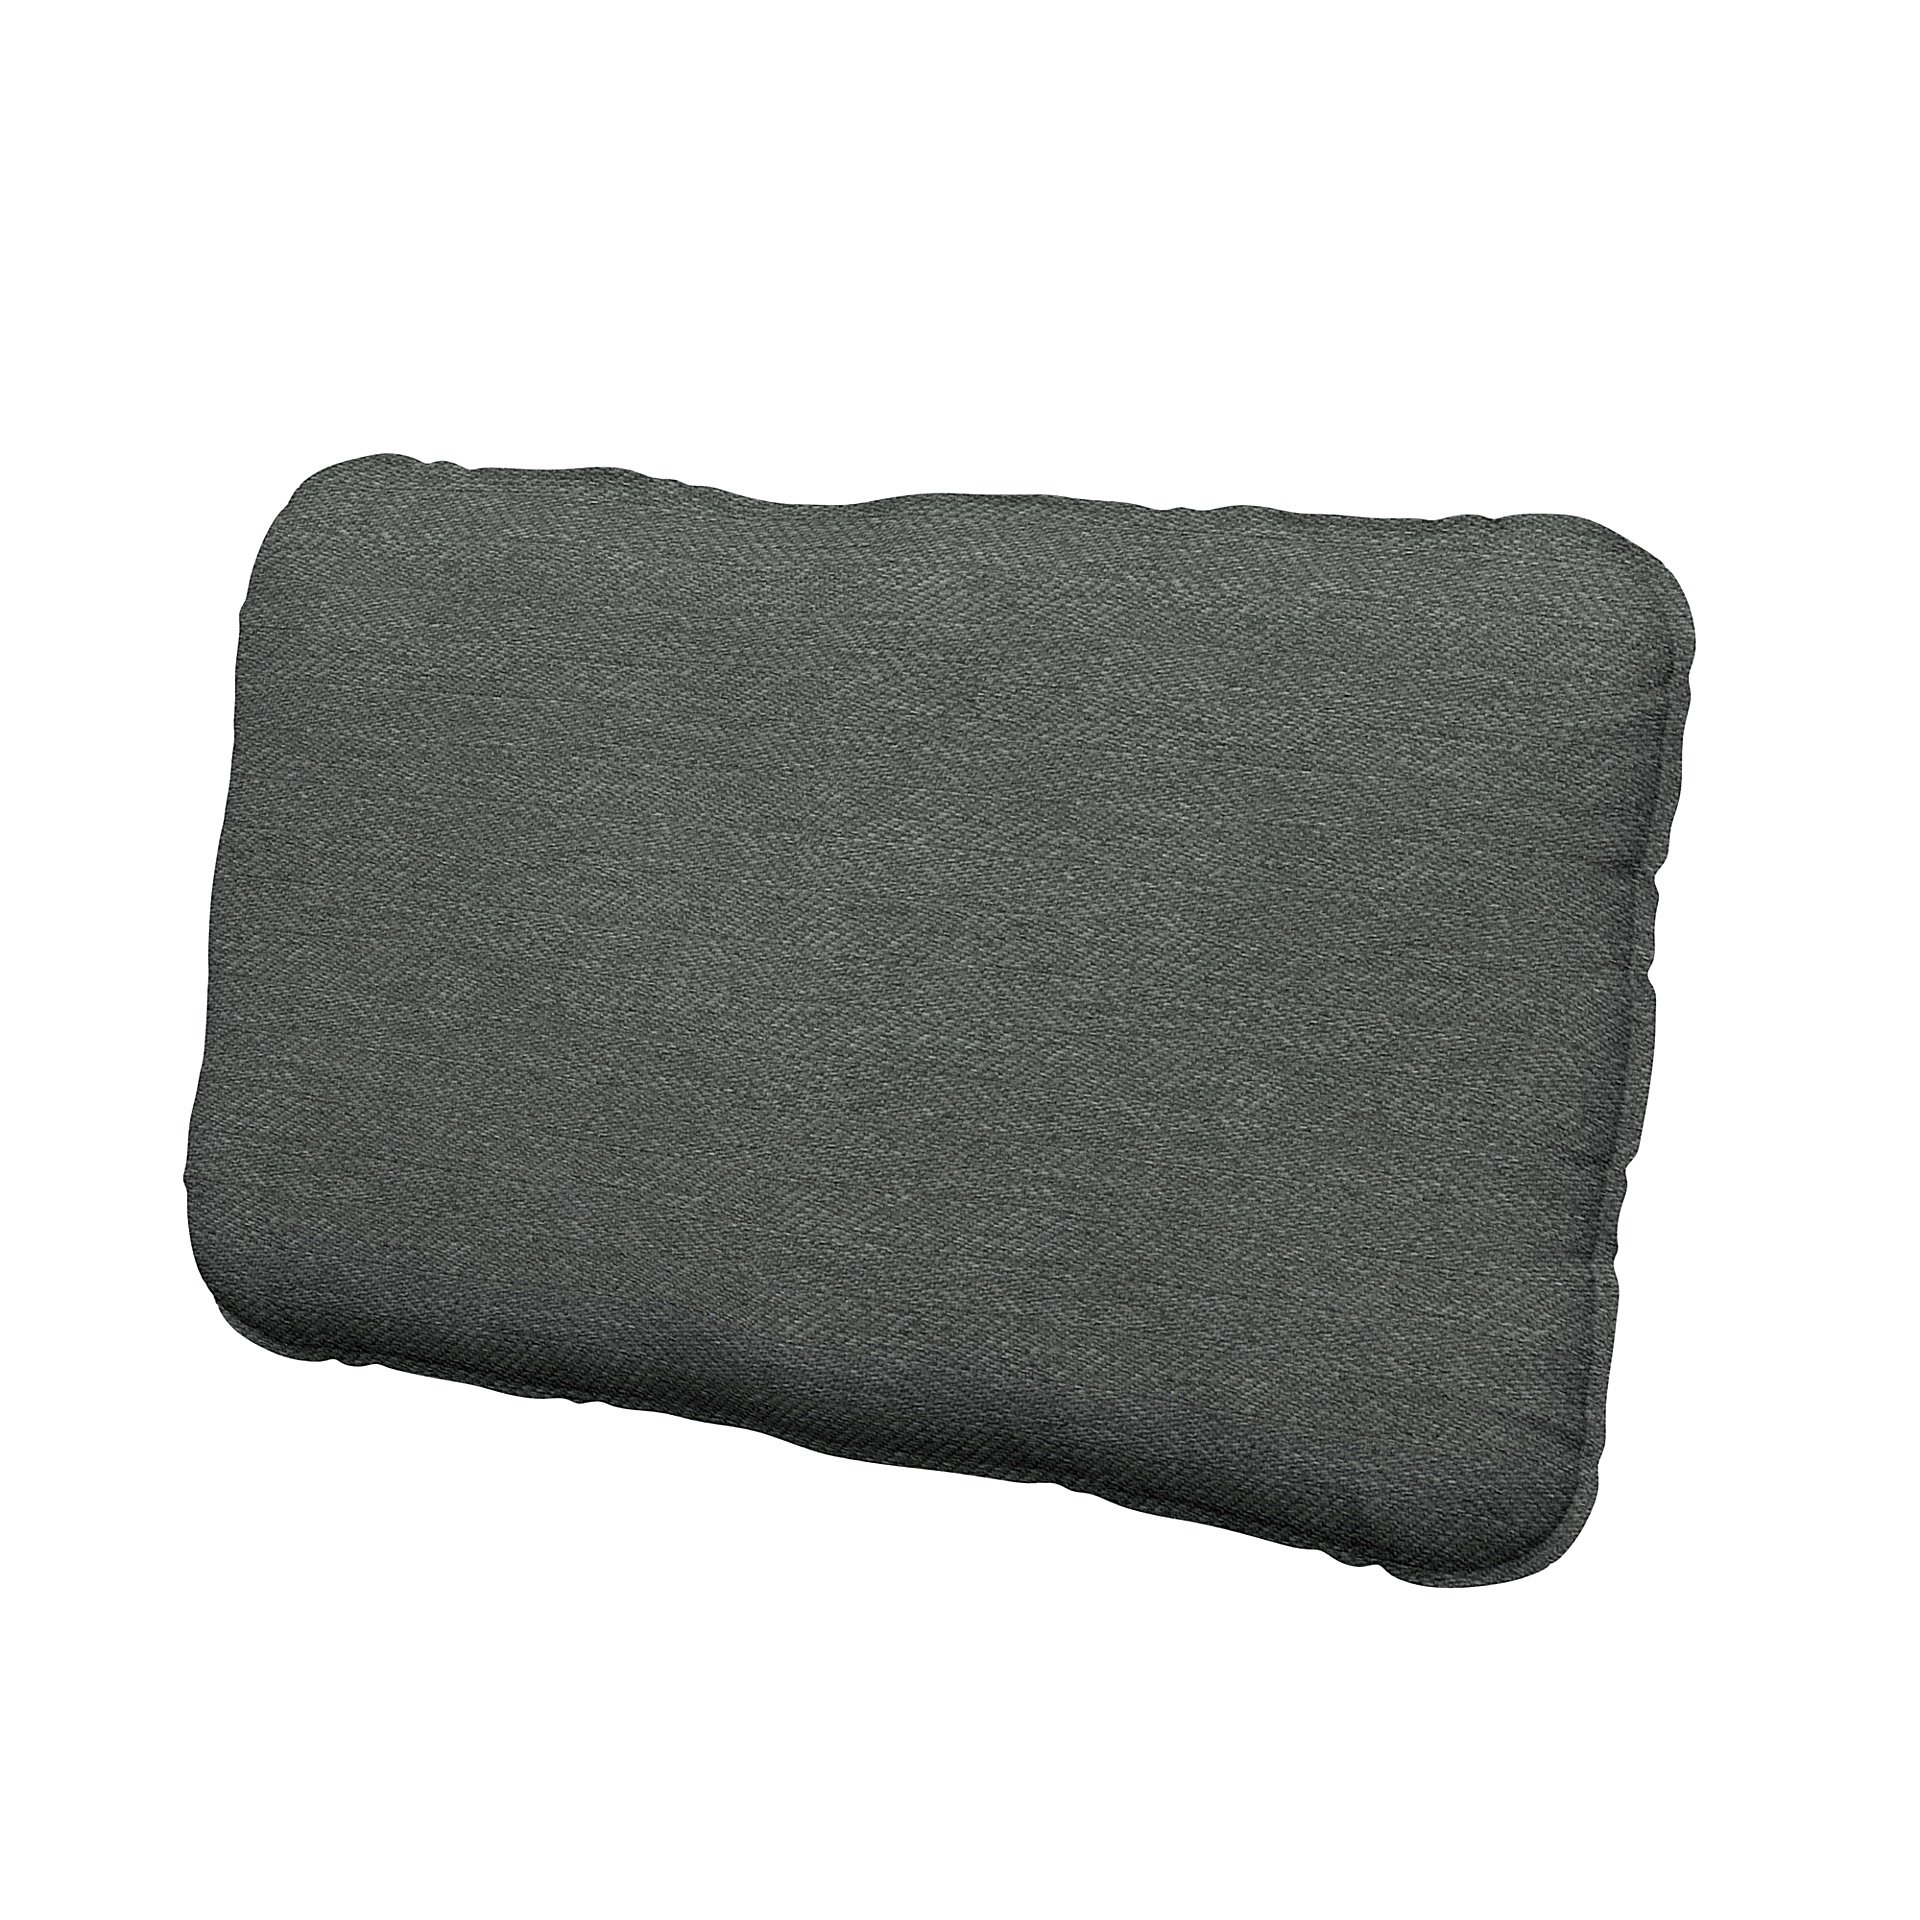 IKEA - Vallentuna back cushion cover 40x75cm, Laurel, Boucle & Texture - Bemz